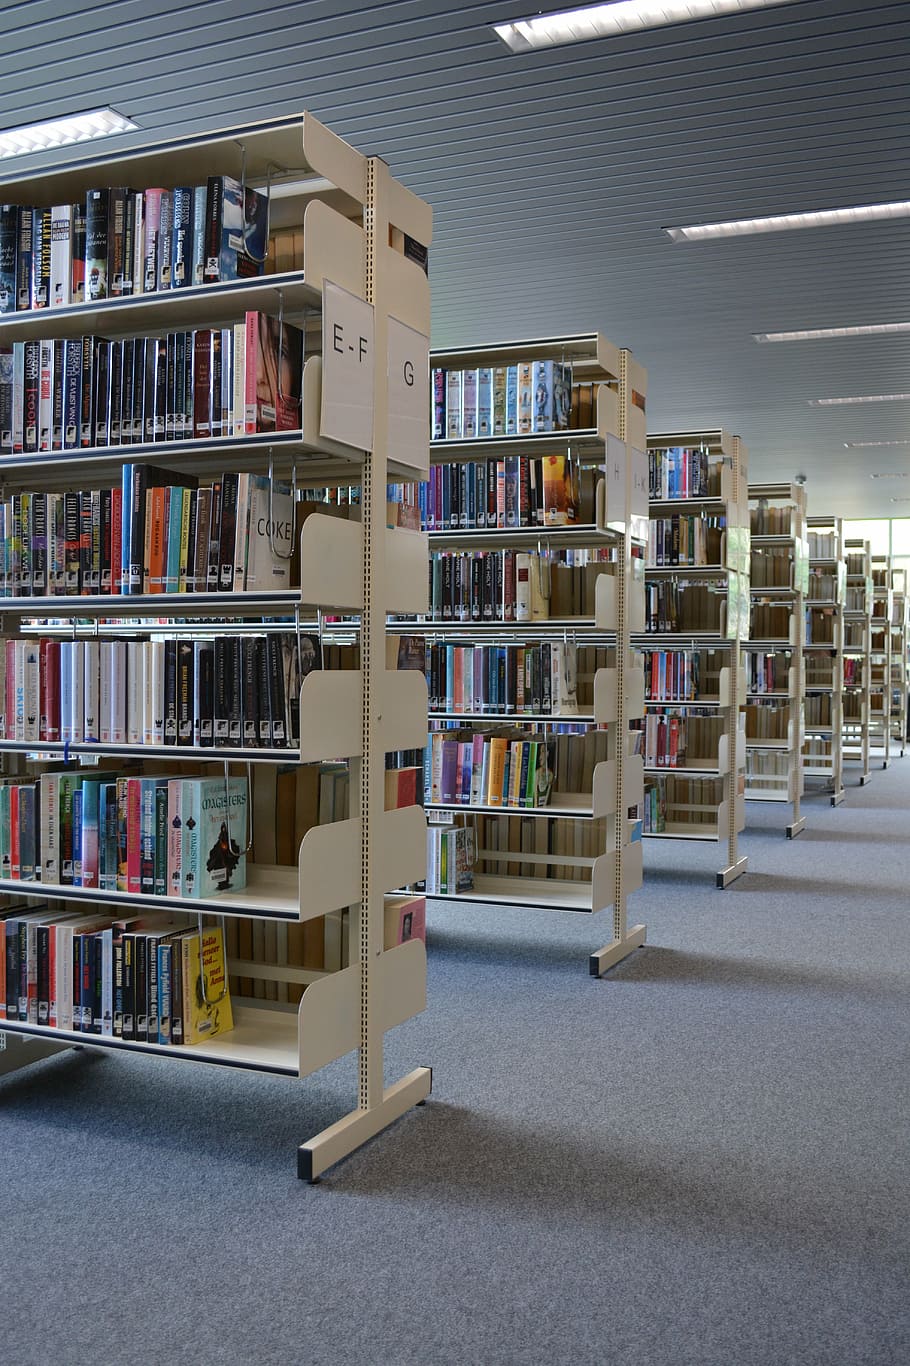 libros, biblioteca, lectura, marcadores, estantería, libro, publicación, estante, educación, gran grupo de objetos